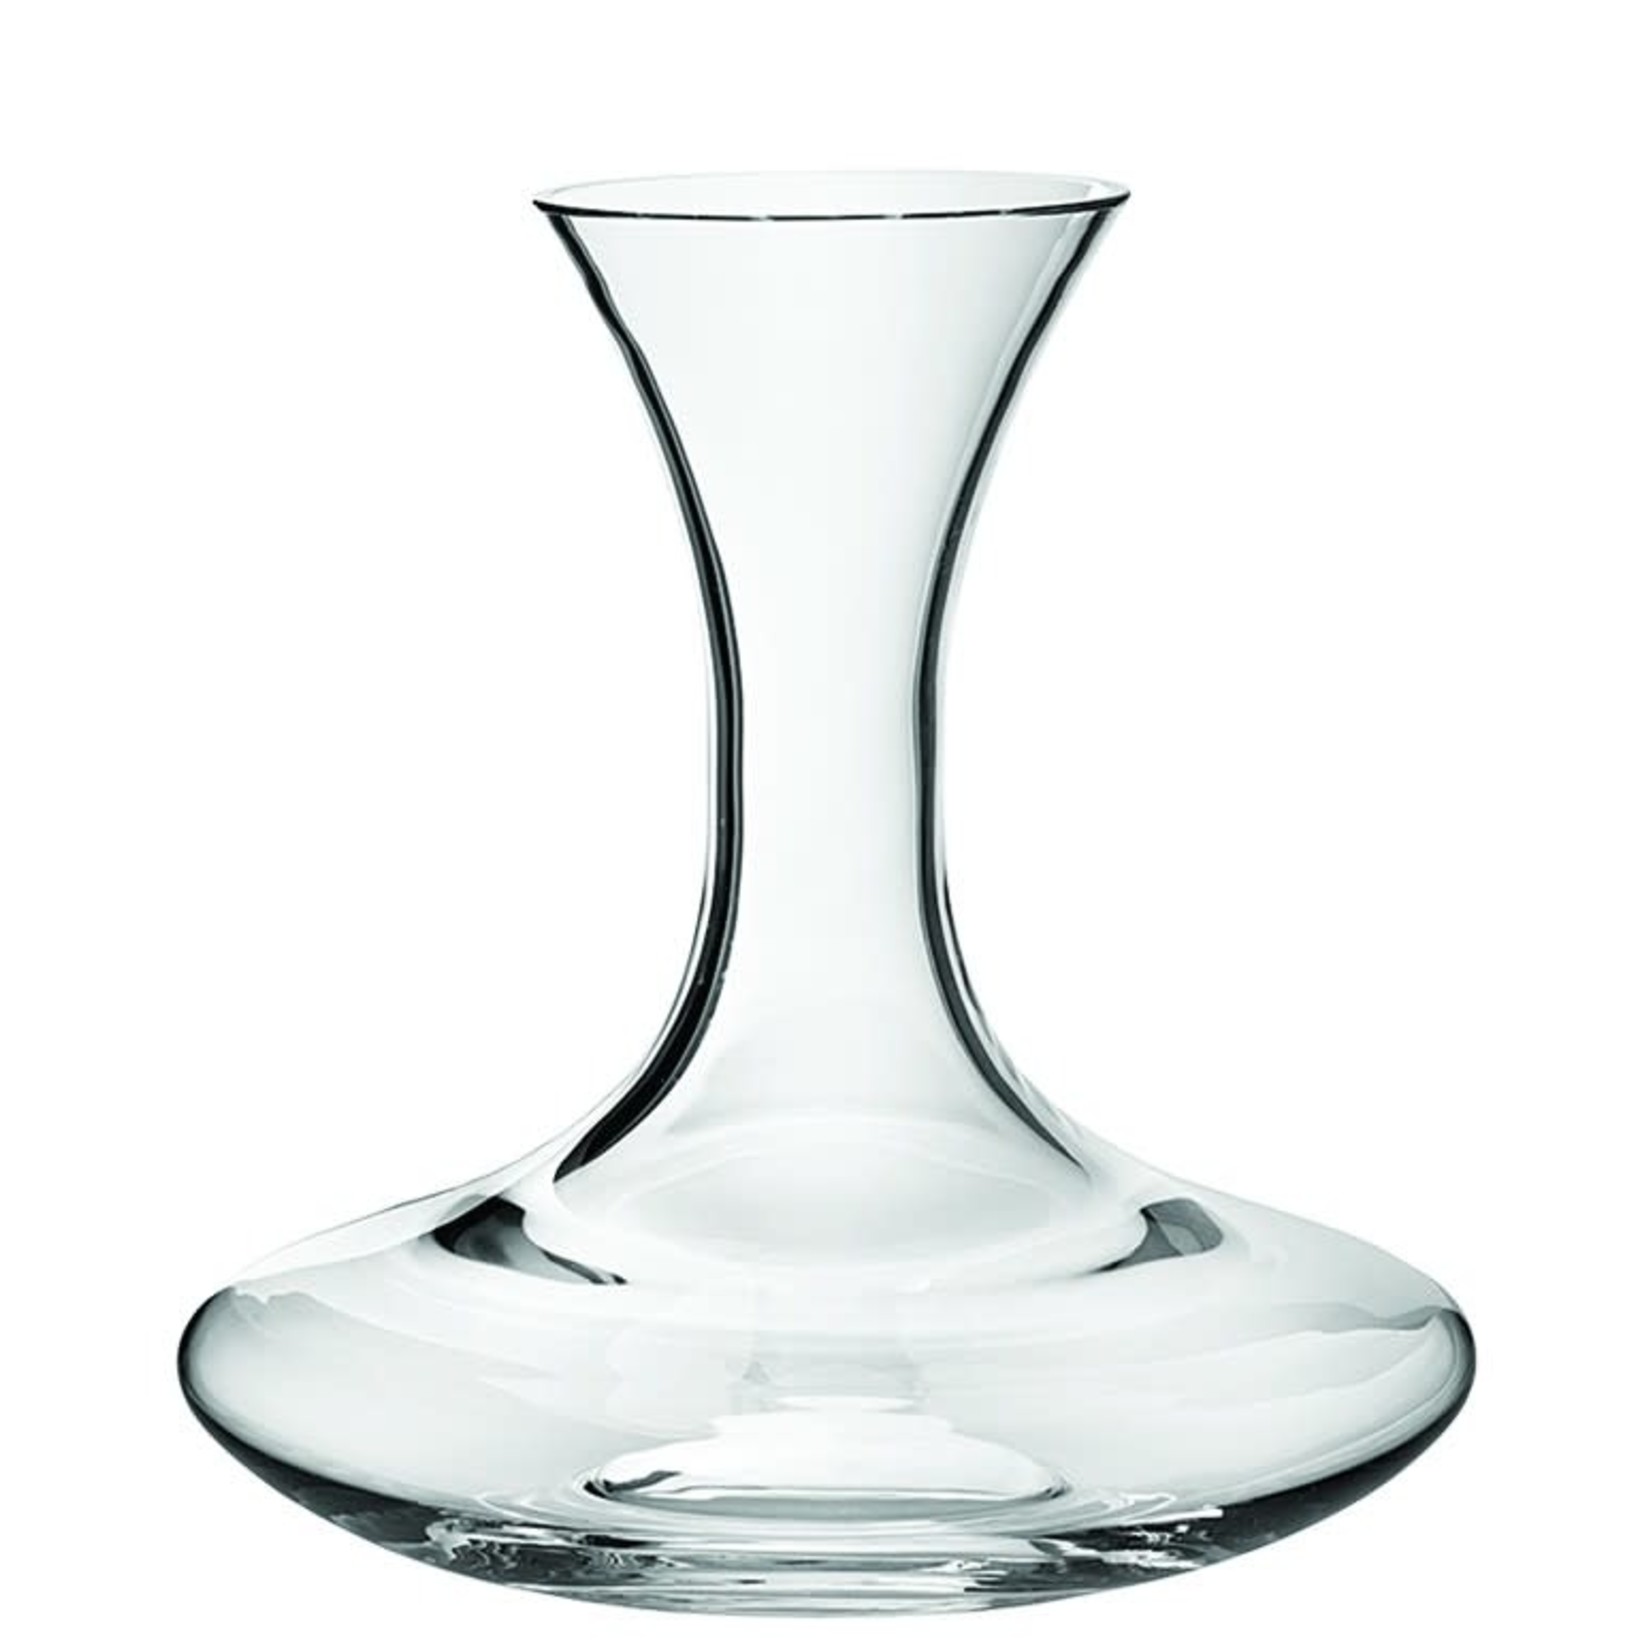 FRANMARA 20-9472 Fran Glass Decanter 54 oz